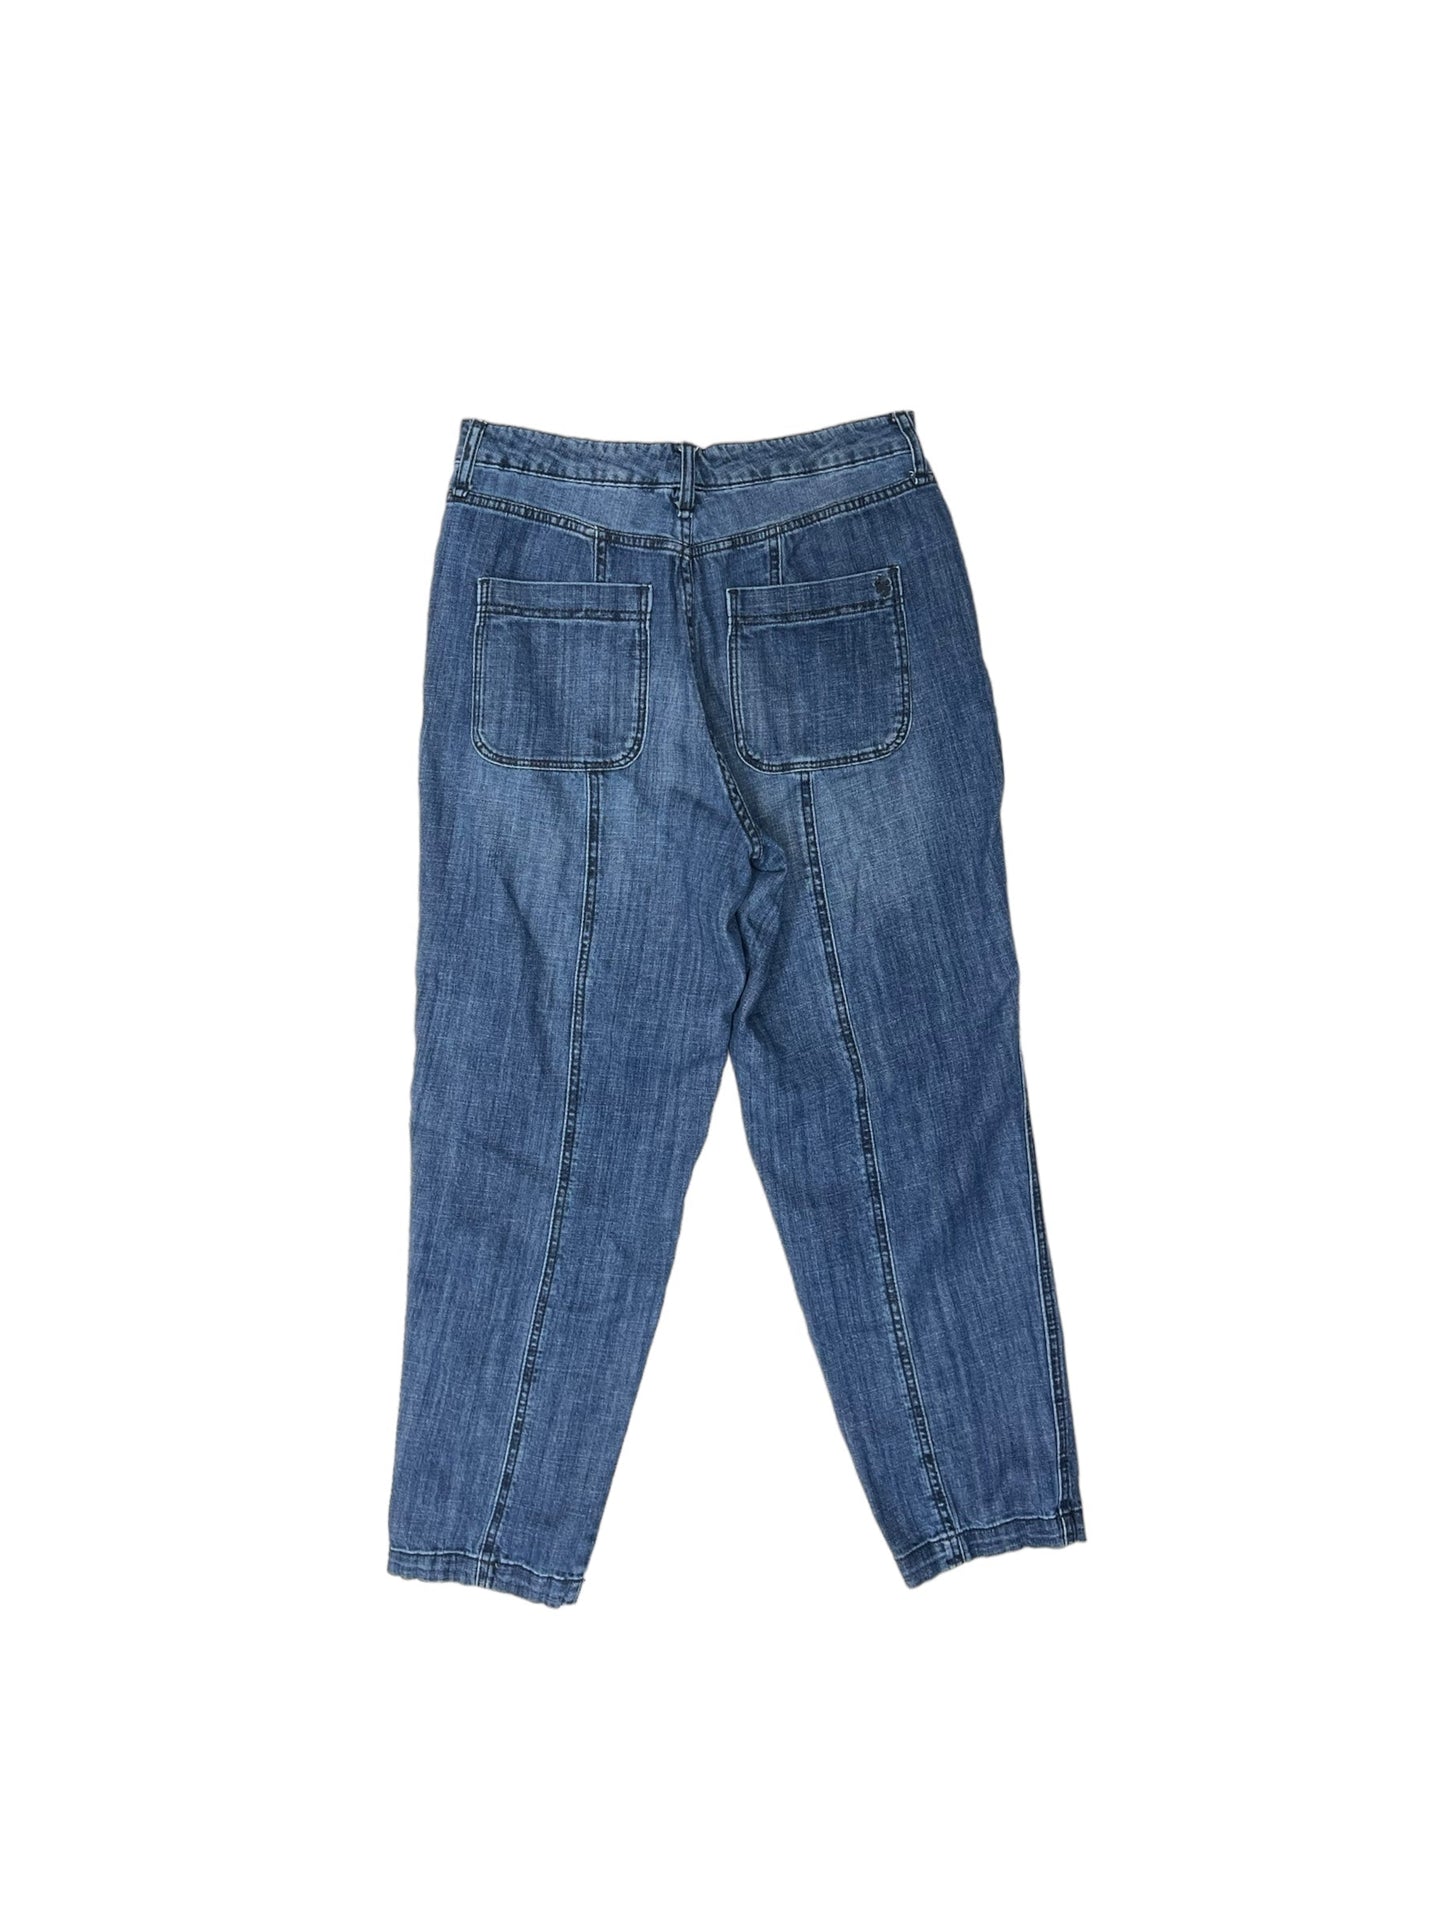 Blue Denim Jeans Straight FRAYED JEANS Size 30